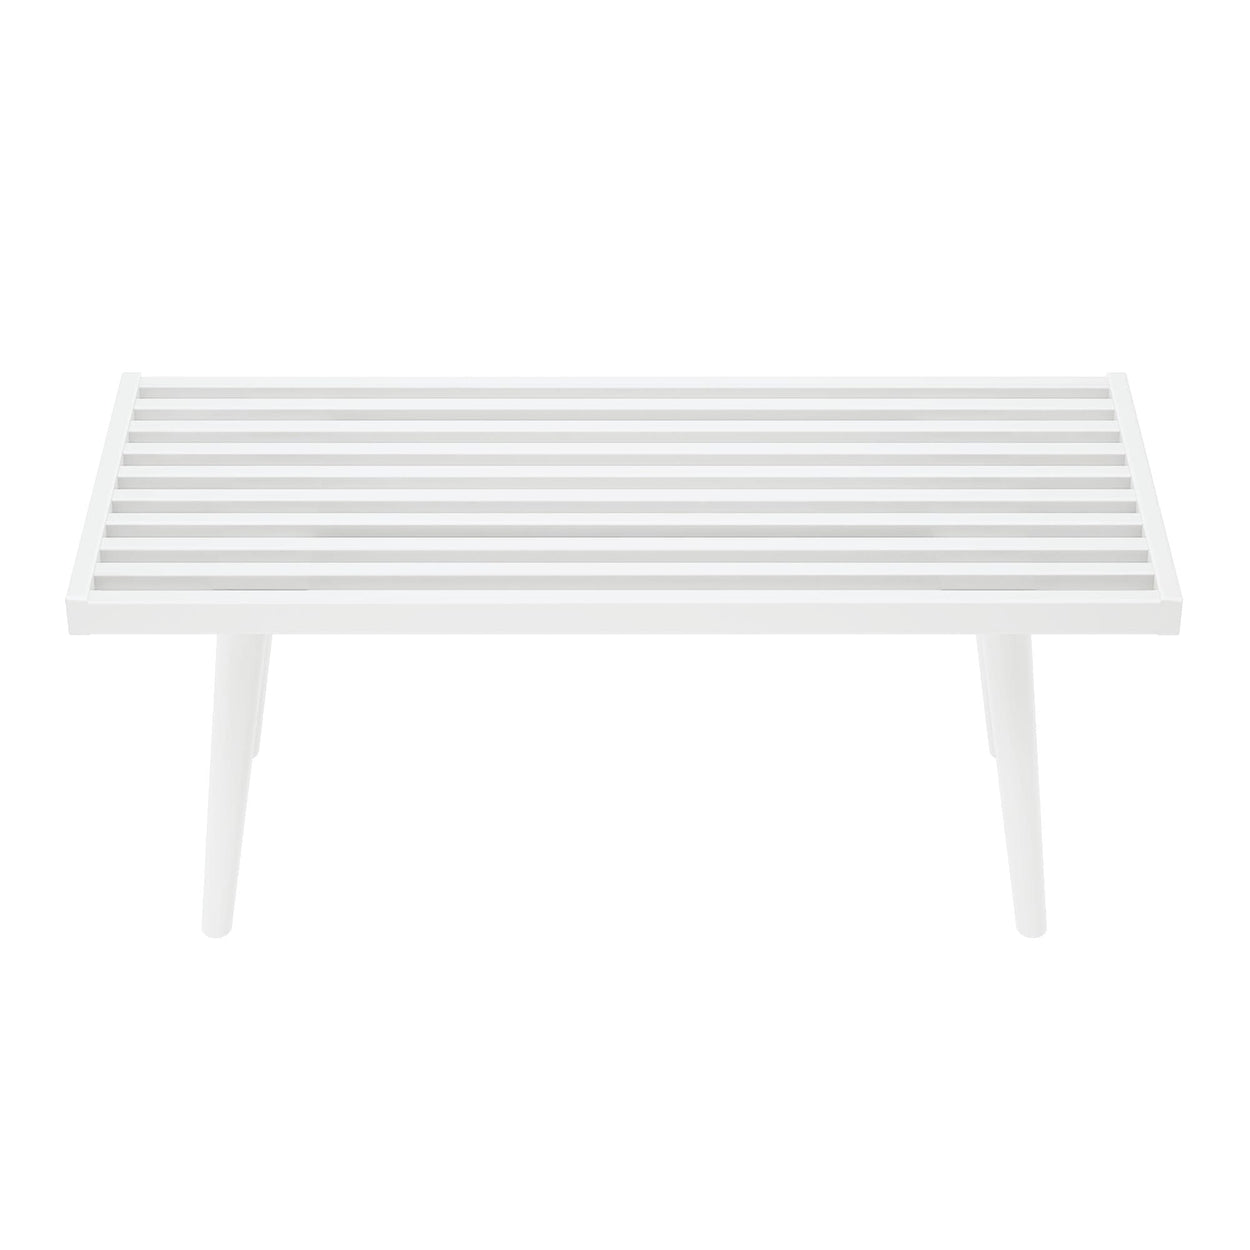 184301-002 : Accessories Mid-Century Modern Twin-Size Bench, White